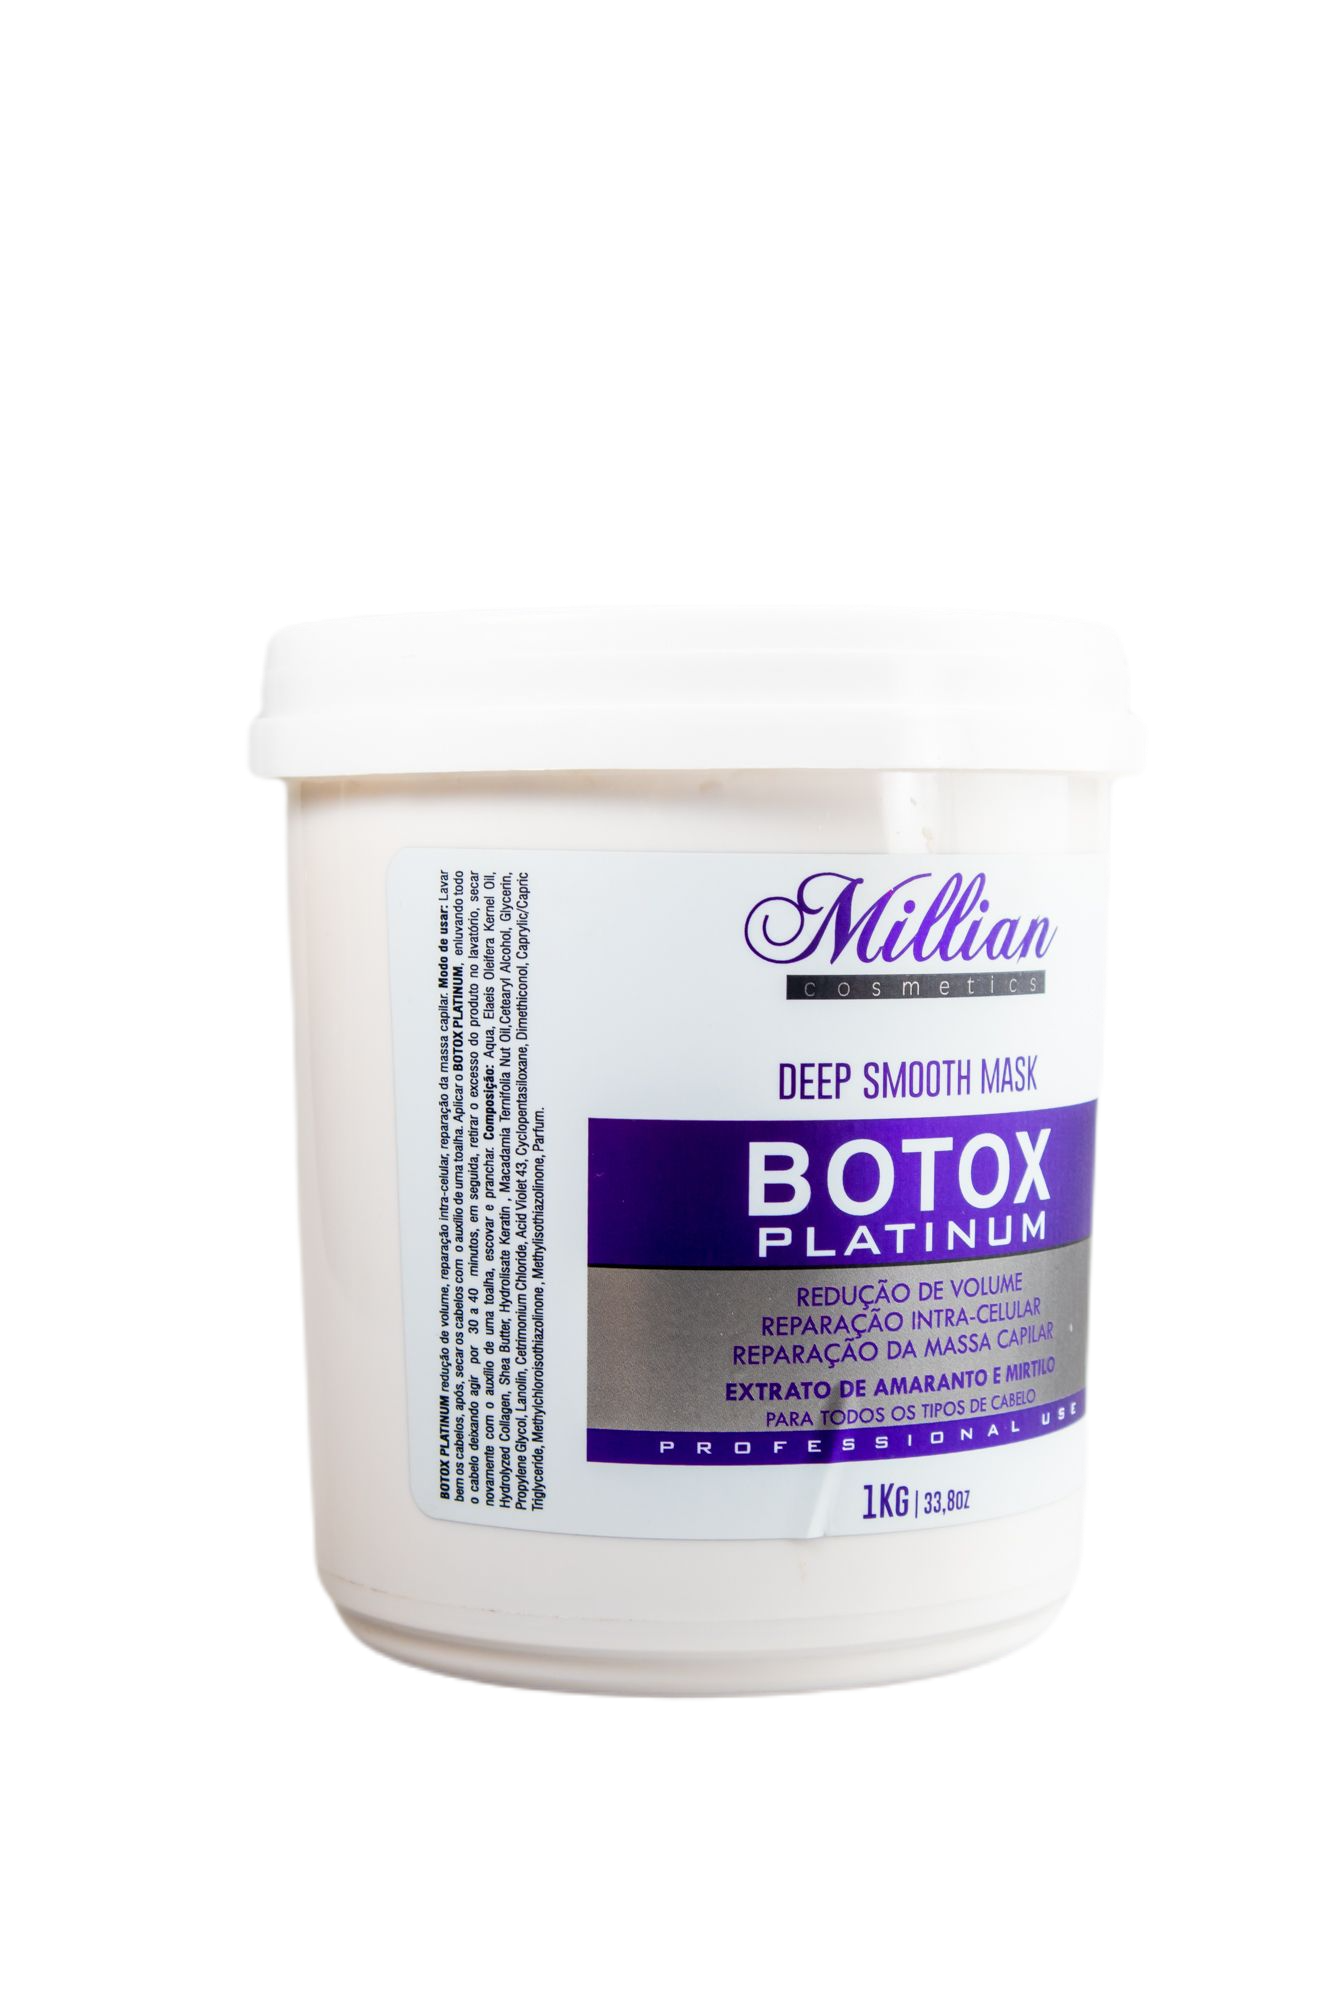 Millian Brazilian Keratin Treatment Deep Smooth Botox Platinum Volume Reduction Repair Hair Mask 1Kg - Millian